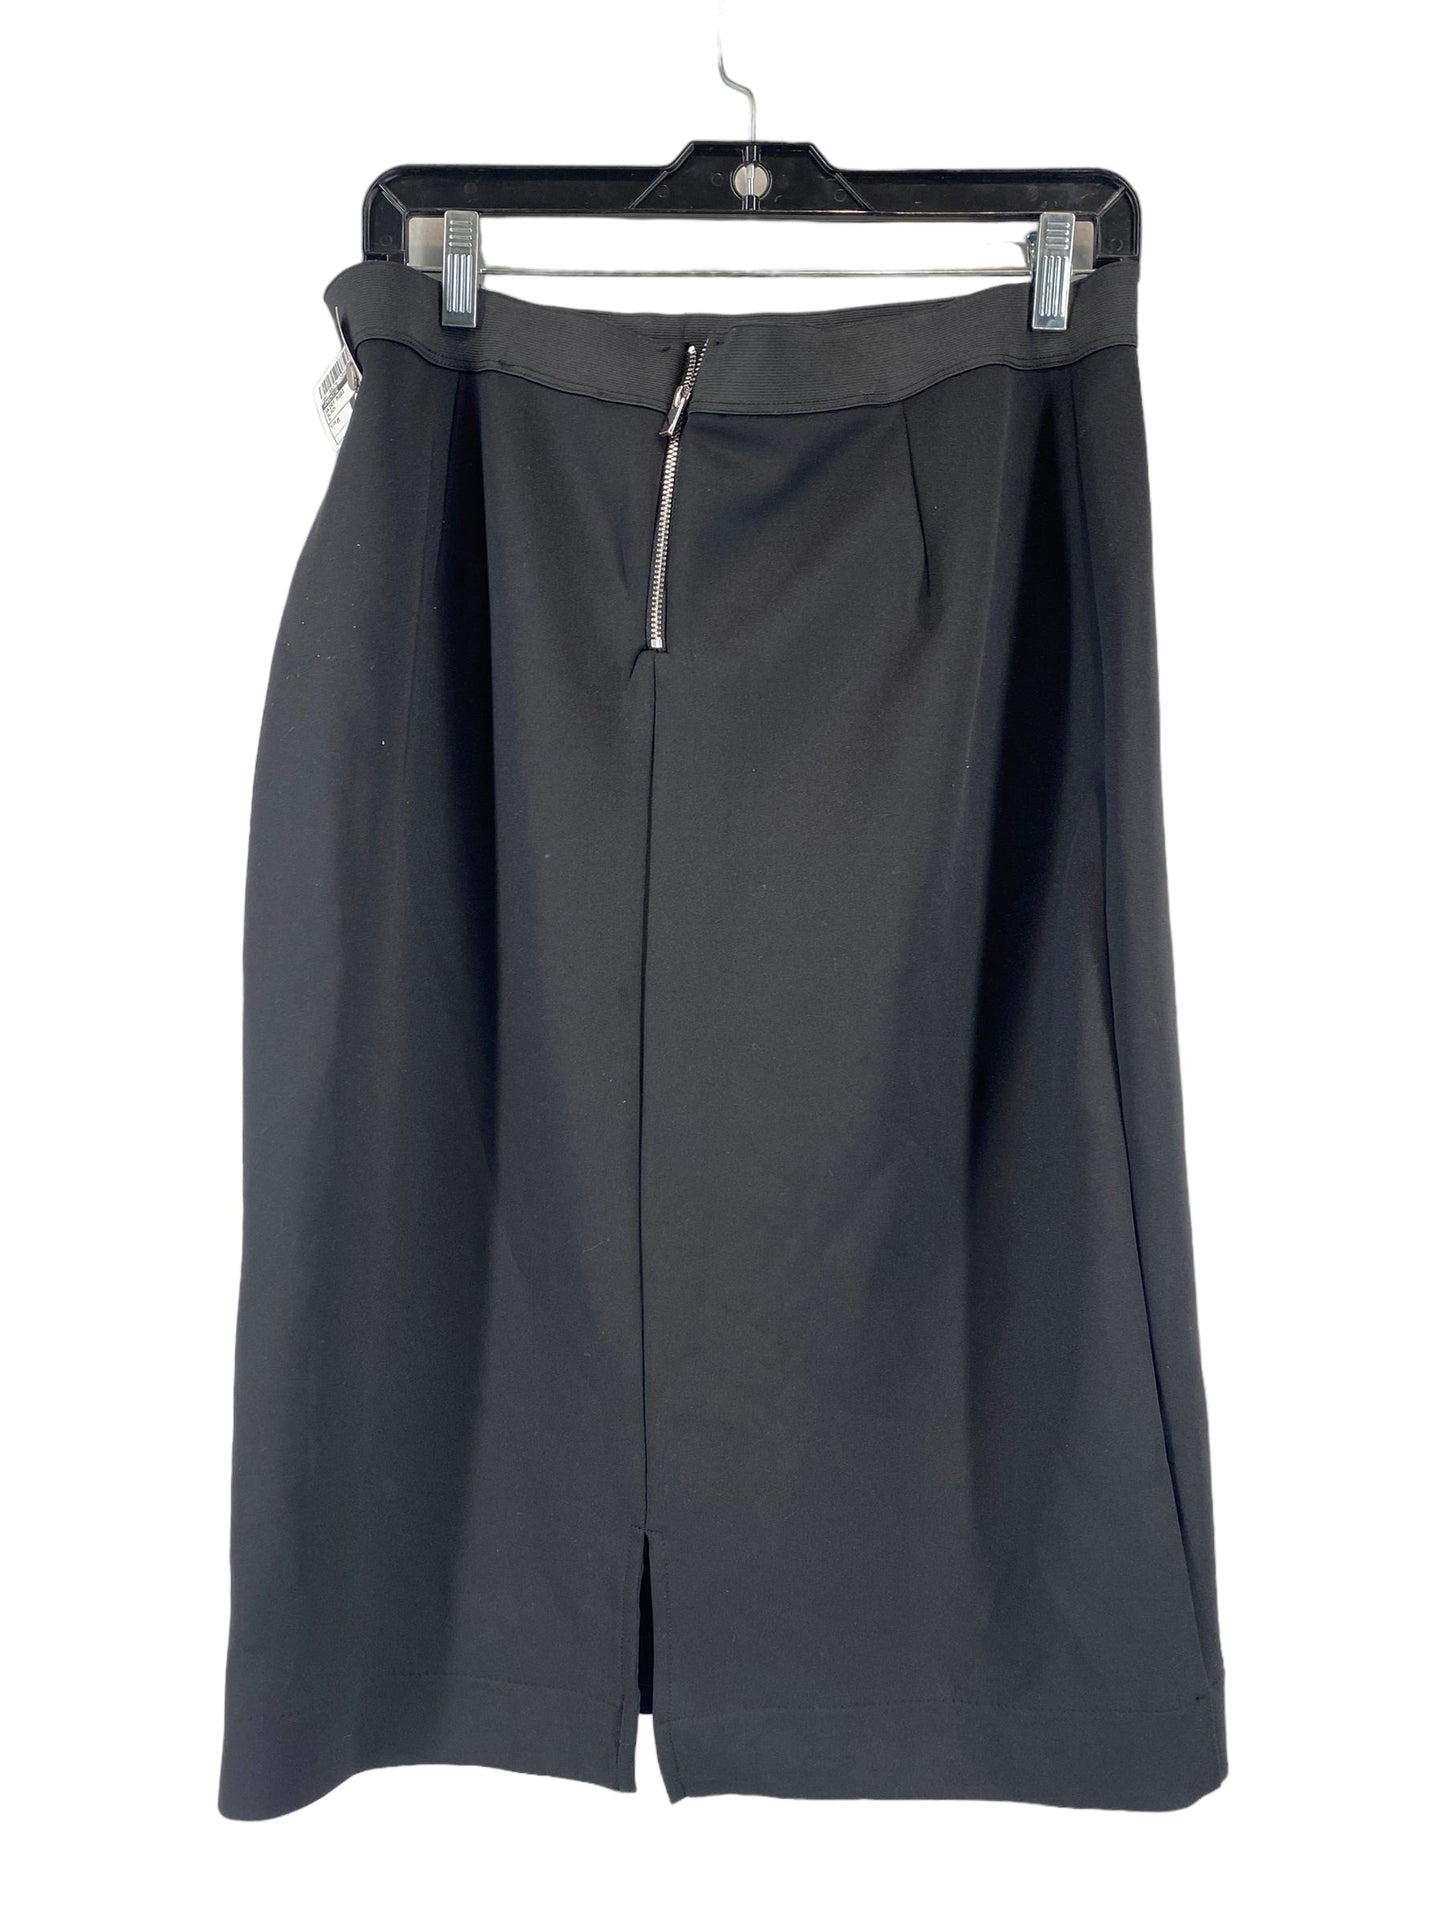 Skirt Midi By Premise  Size: M